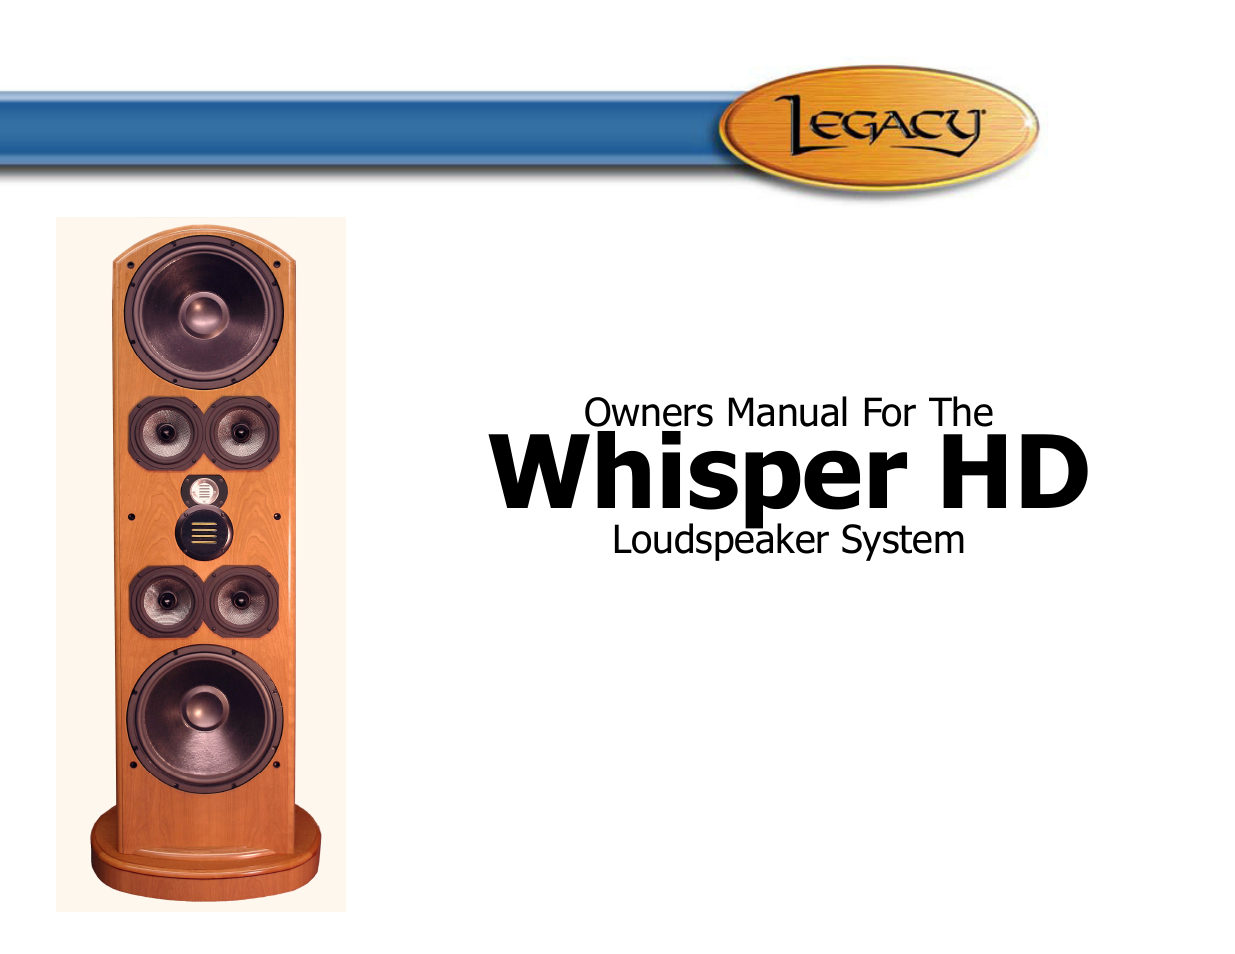 Whisper HD